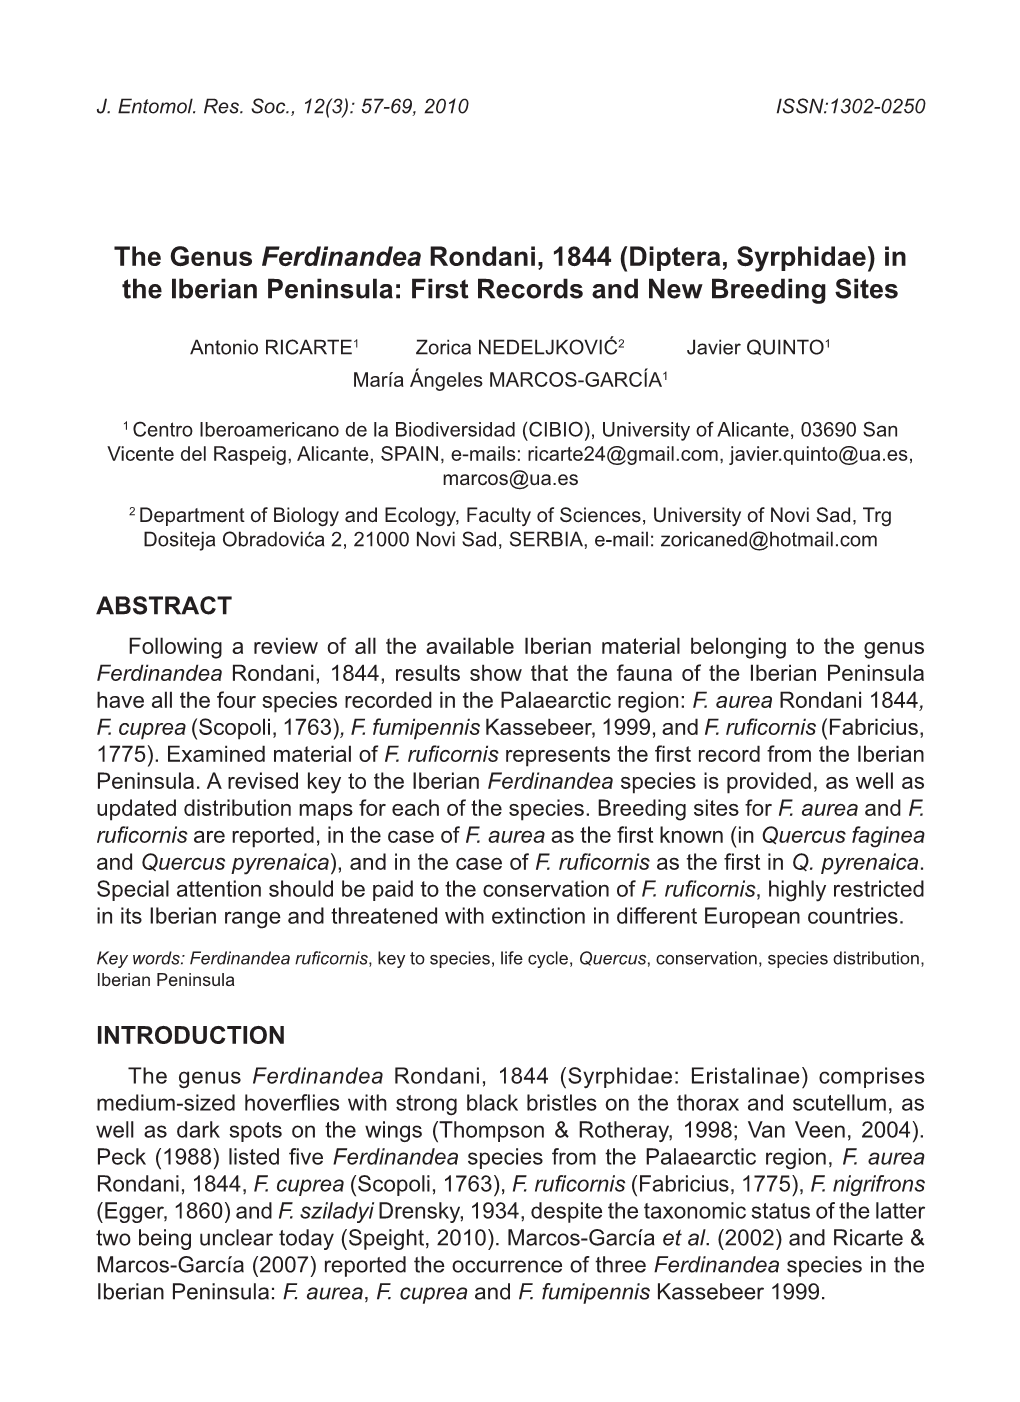 The Genus Ferdinandea Rondani, 1844 (Diptera, Syrphidae) in the Iberian Peninsula: First Records and New Breeding Sites